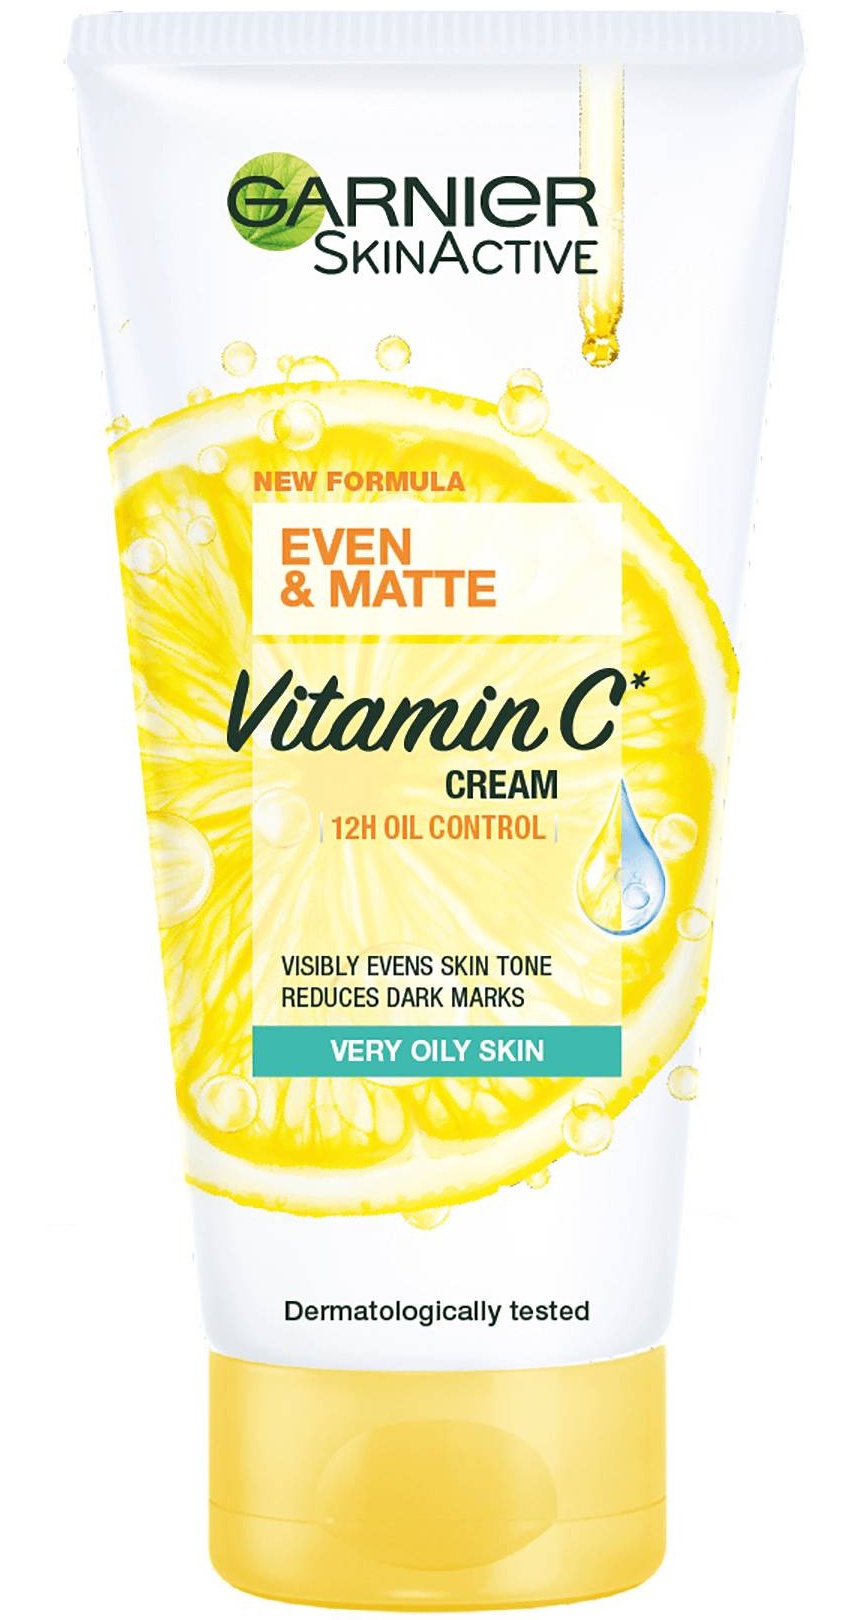 Garnier SkinActive Even & Matte Vitamin C Cream